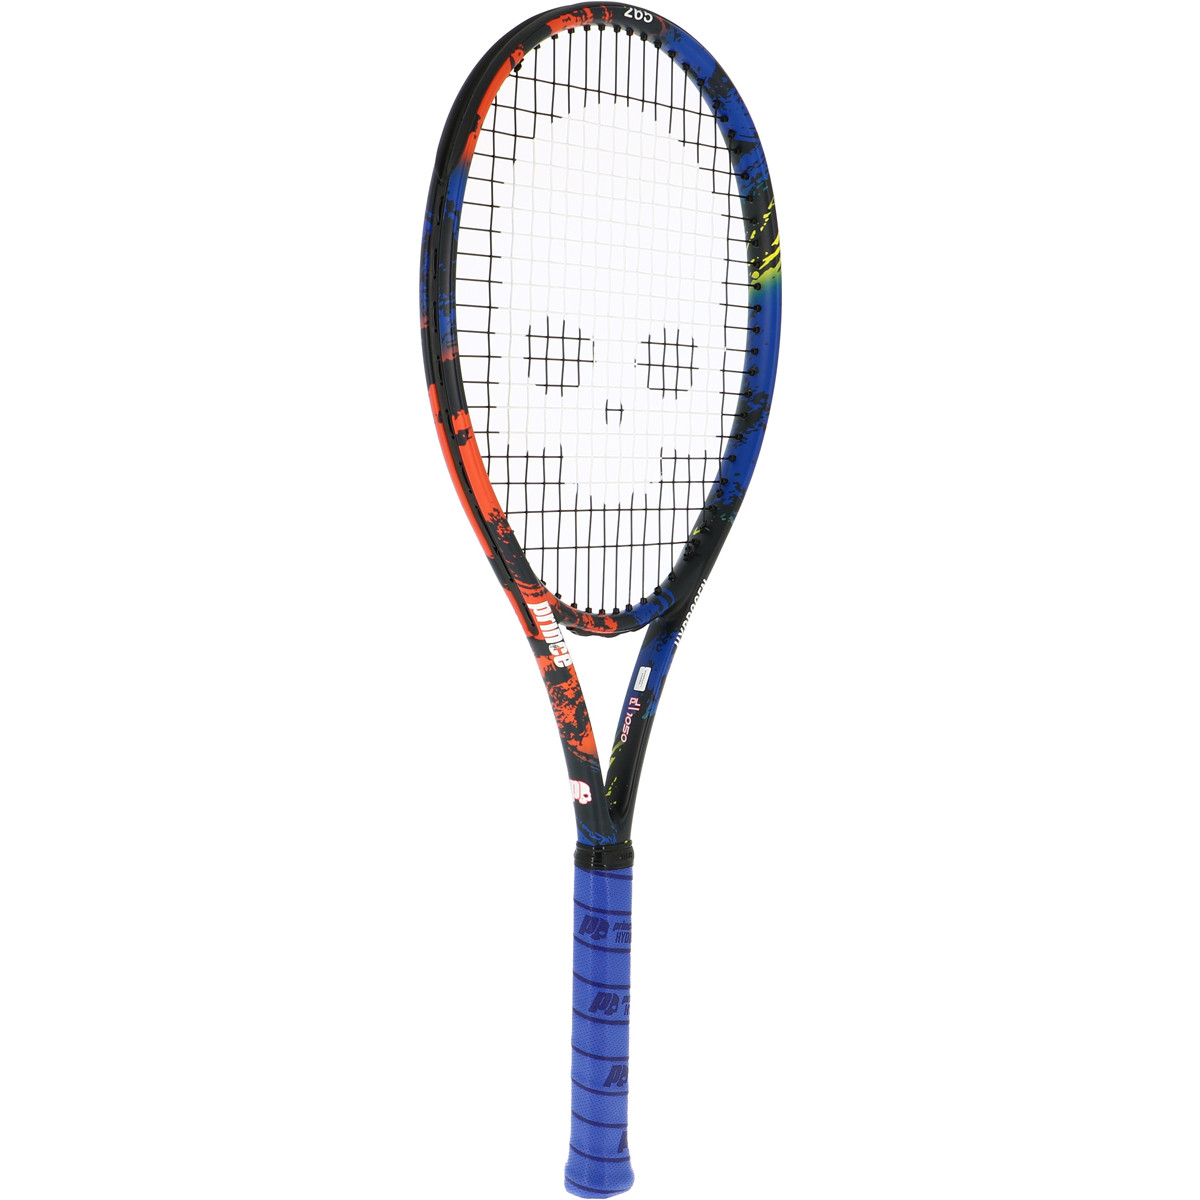 PRINCE/HYDROGEN RANDOM RACQUET (280 GR) - PRINCE - Adult Racquets